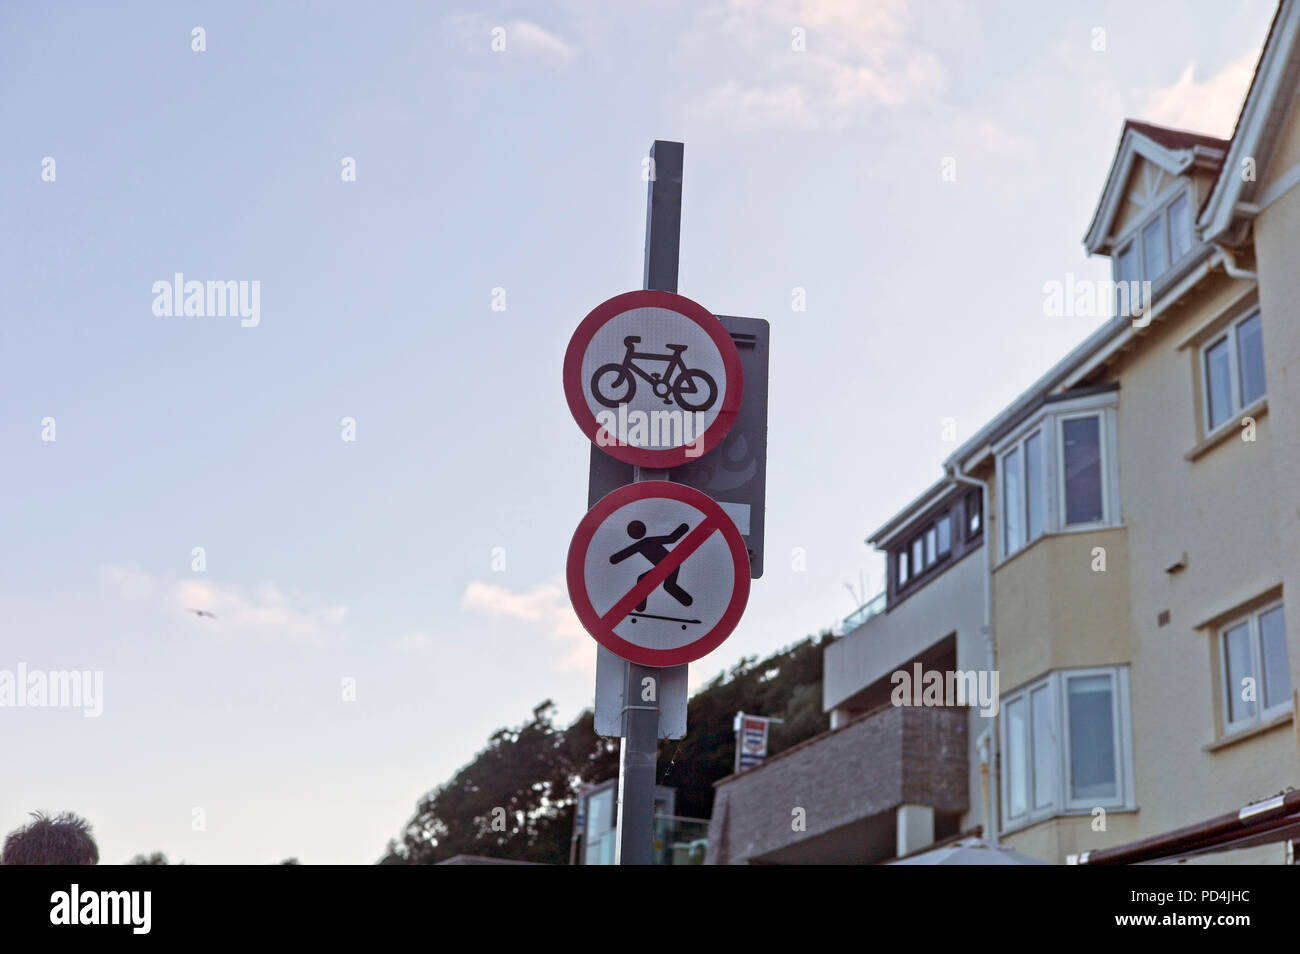 No skateboarding and no cycling - confusing road signs Stock Photo